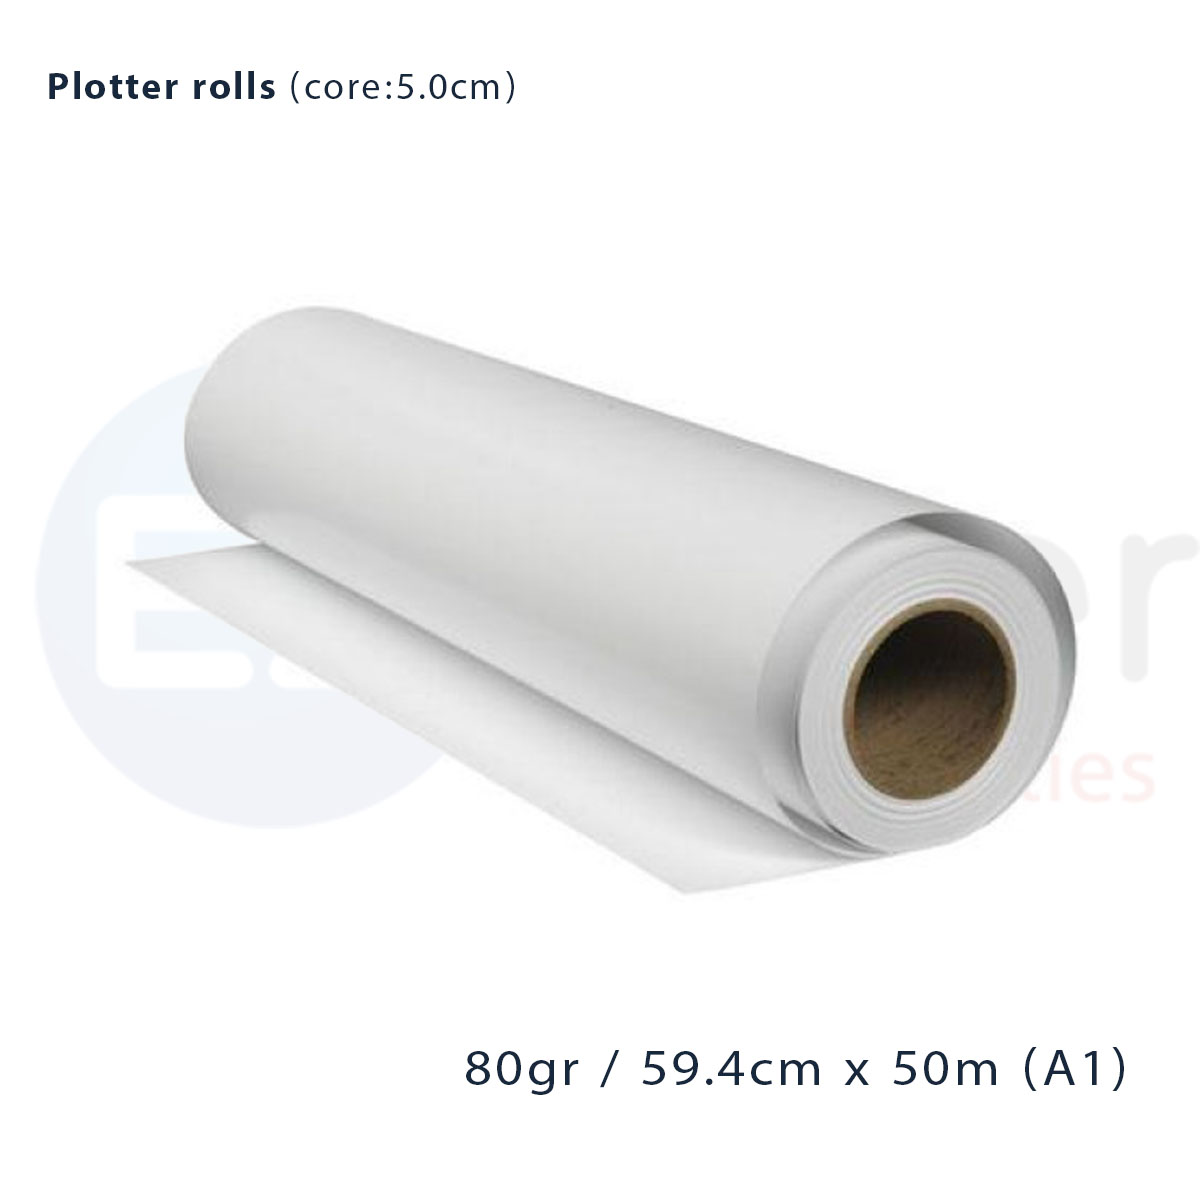 +Plotter roll (59.4x50m) 80gr, A1, Core-5cm